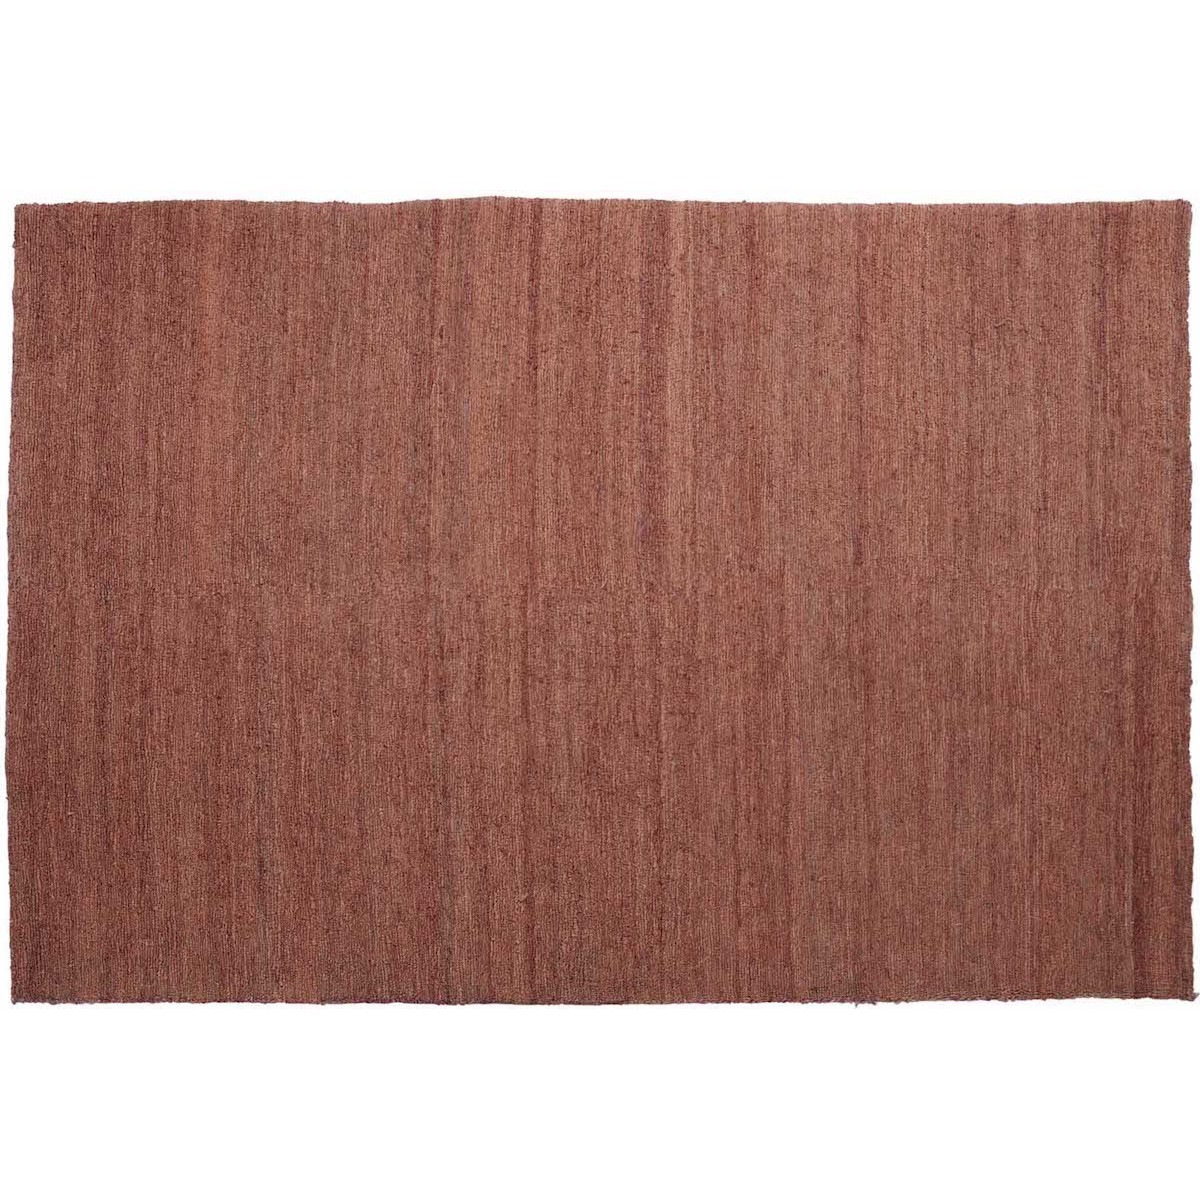 170x240cm - terracotta - Earth rug